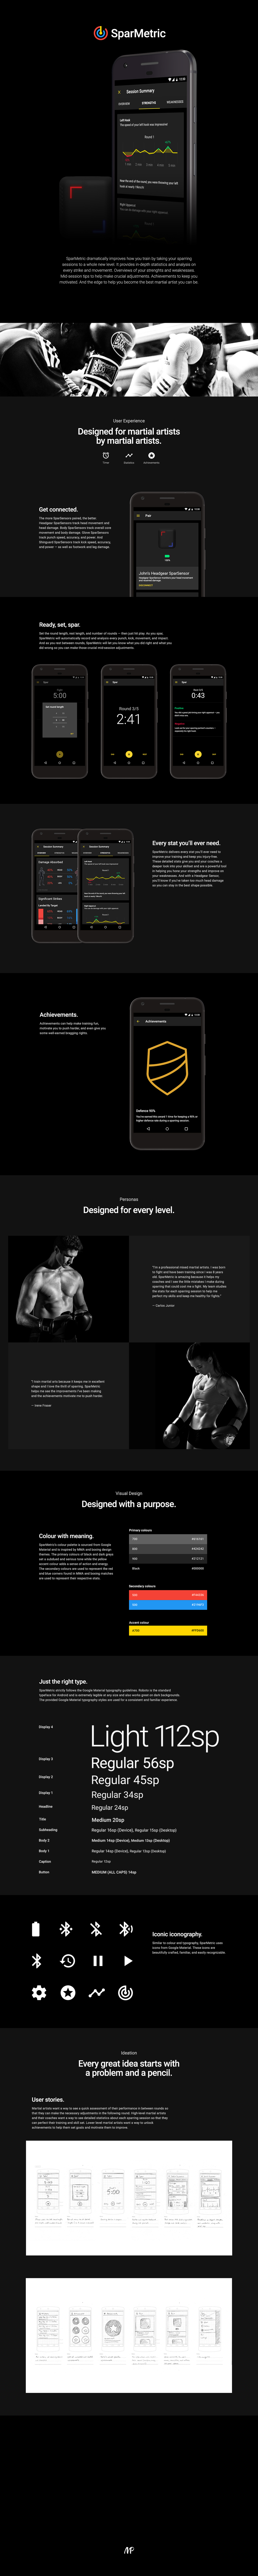 app UI ux app design Boxing MMA spar fitness app user interface experience design